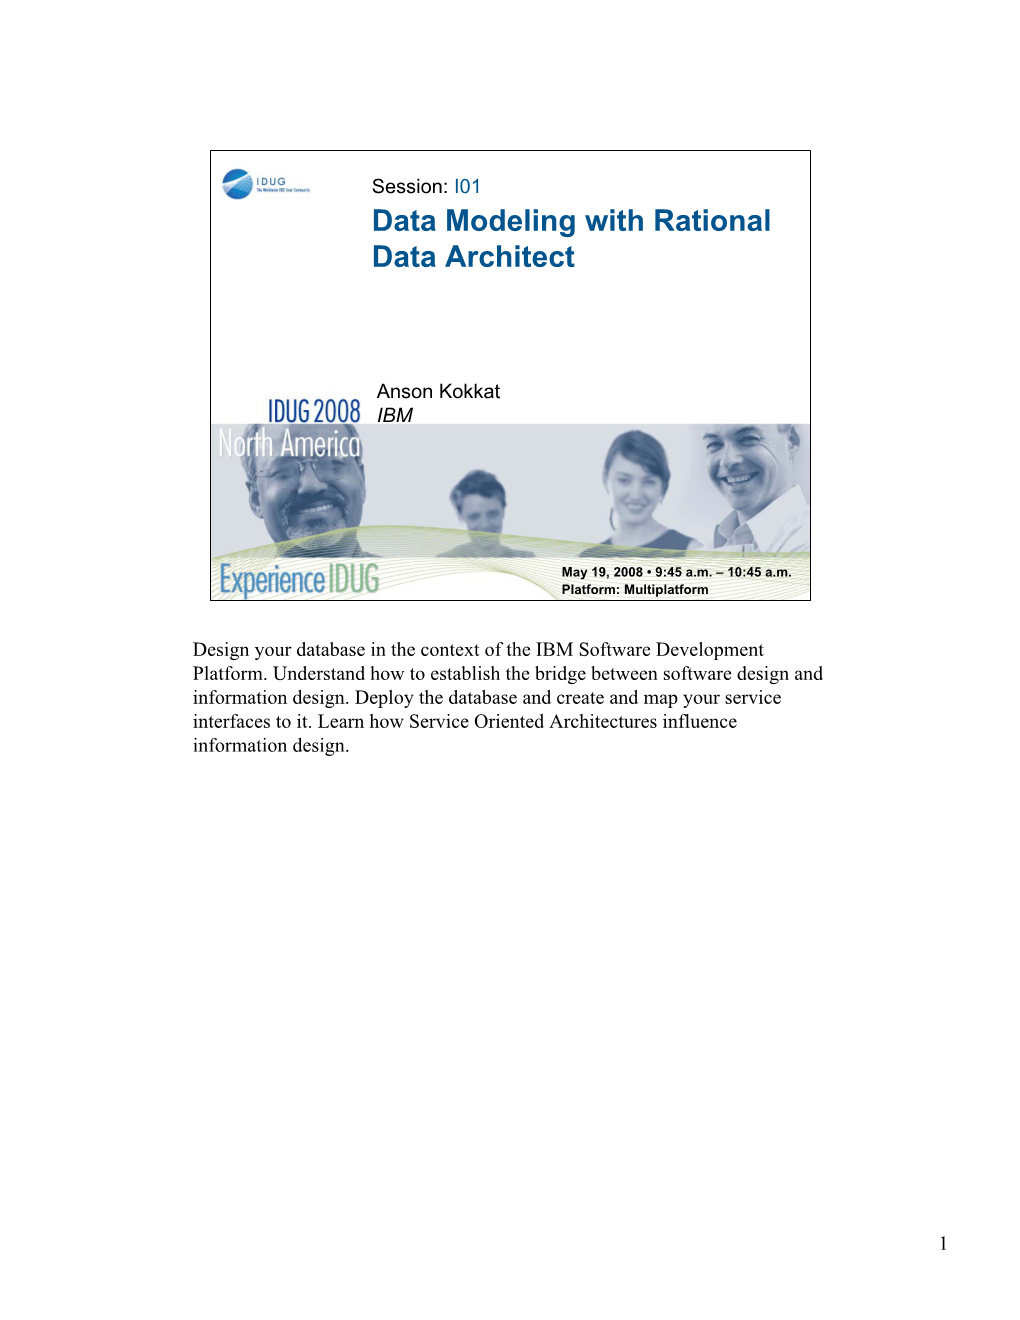 Data Modeling with Rational Data Architect